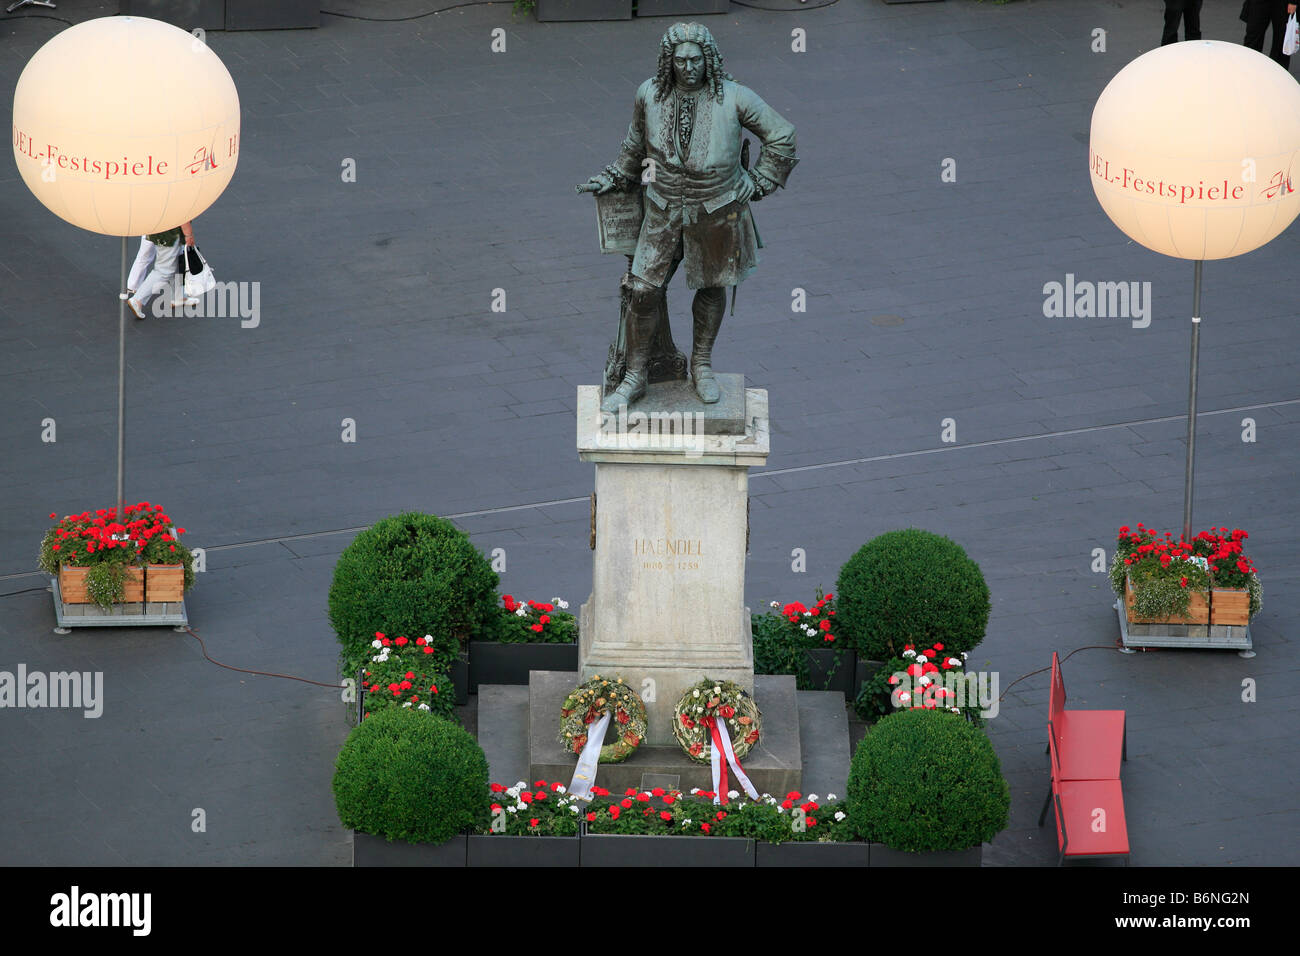 Estatua de Georg Friedrich Händel en market place durante Händel Festival 2008 en Halle (Saale), Alemania; Händelfestspiele 2008 Foto de stock